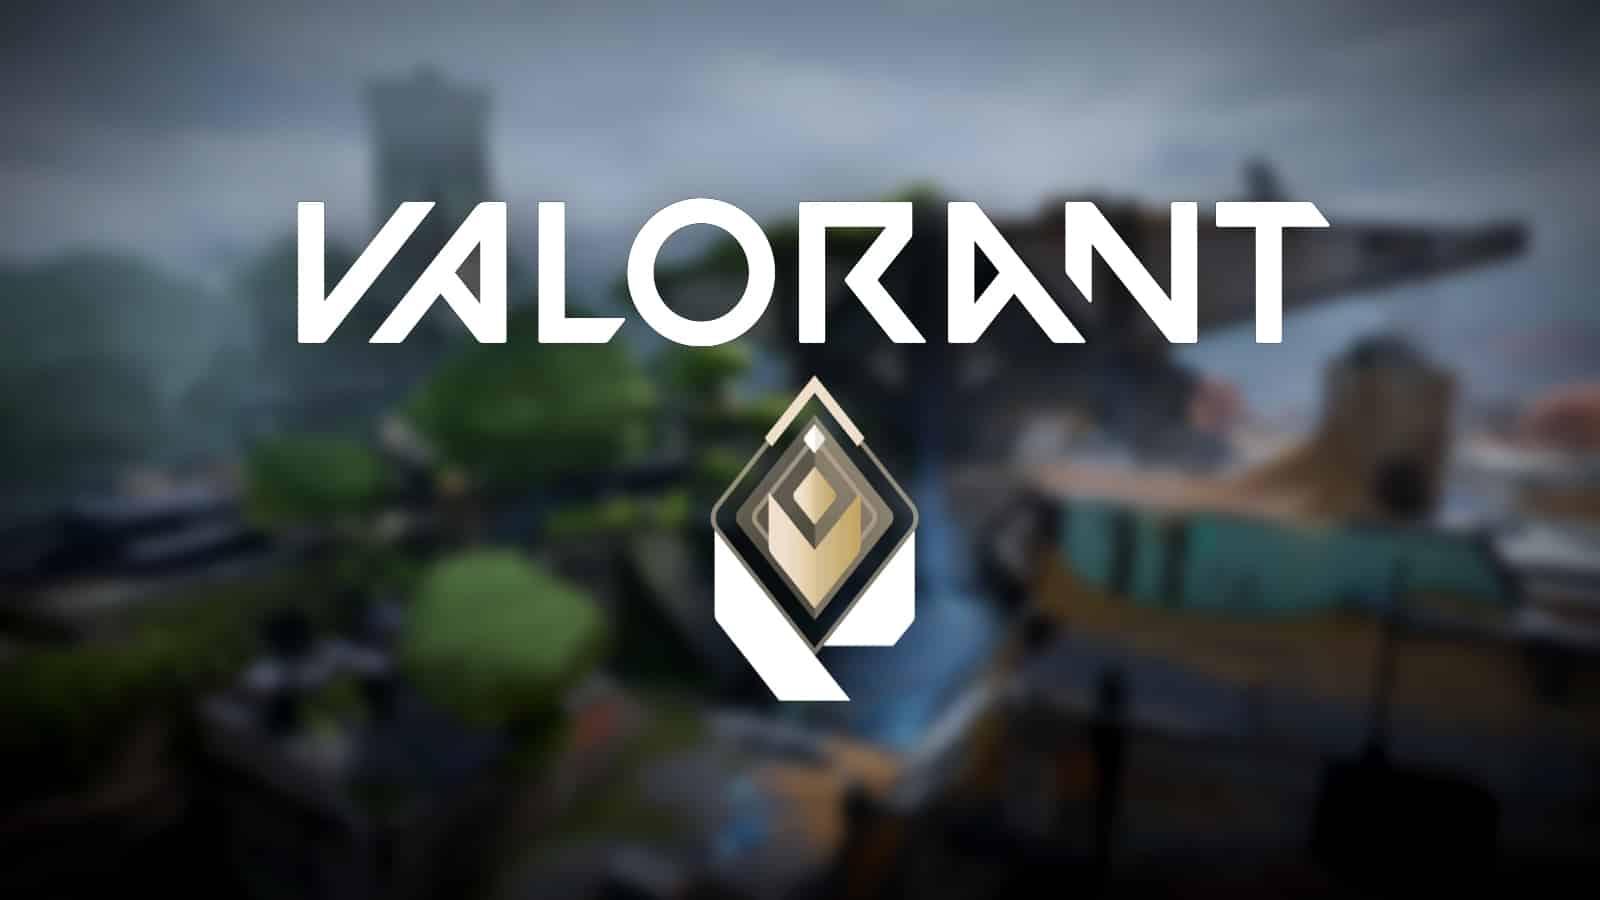 Riot Games' Effective Approach toward VALORANT Smurfs